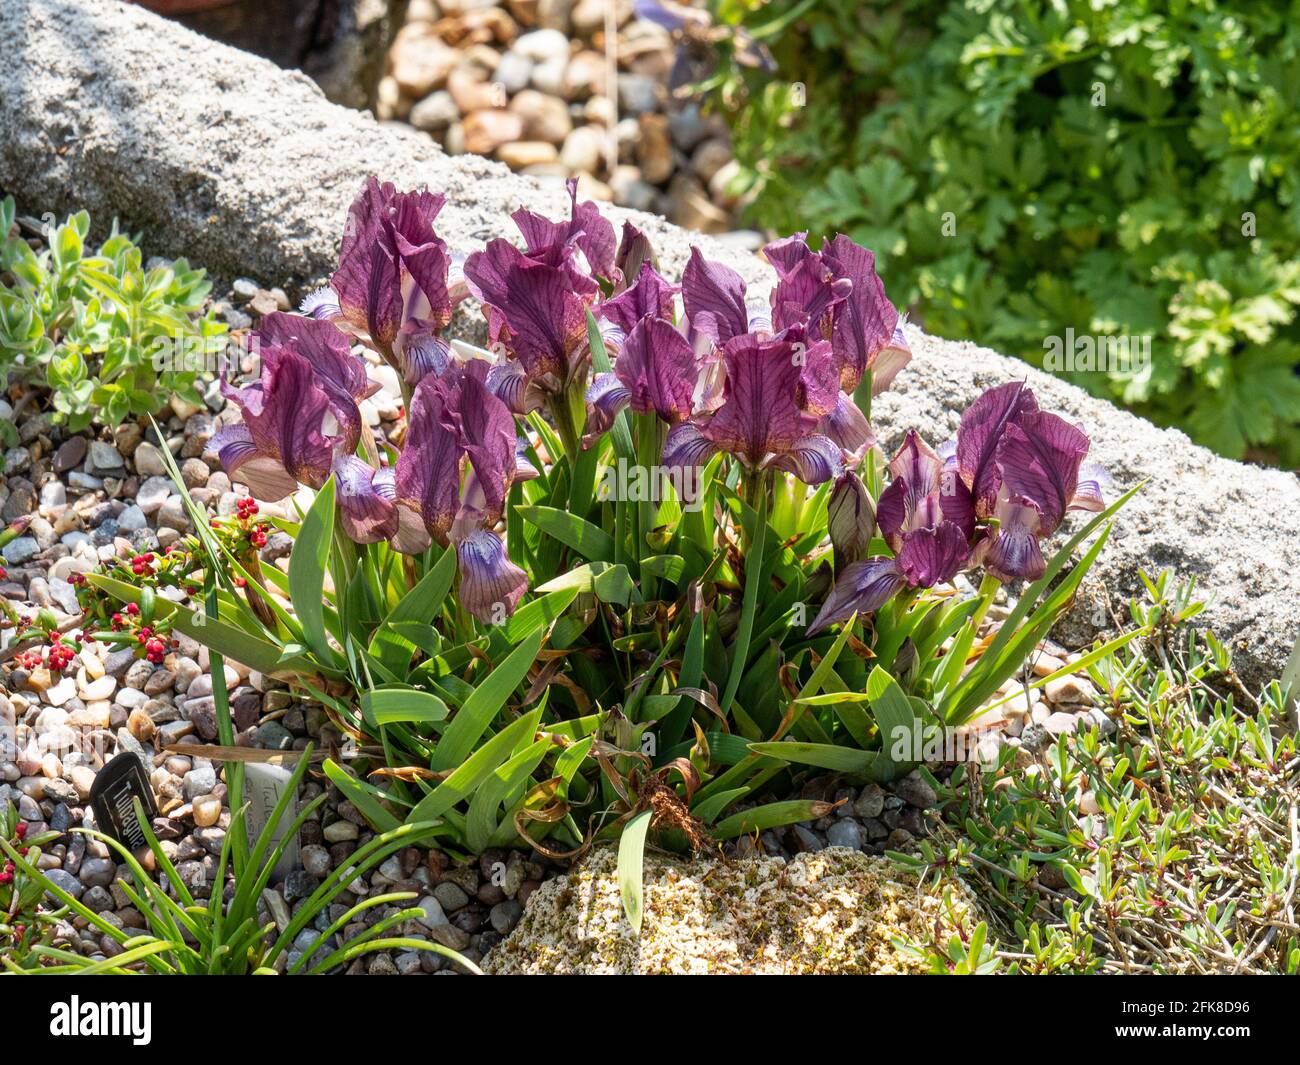 The dwarf purple flowered Iris suaveolens flowering on the edge of sink garden. Stock Photo